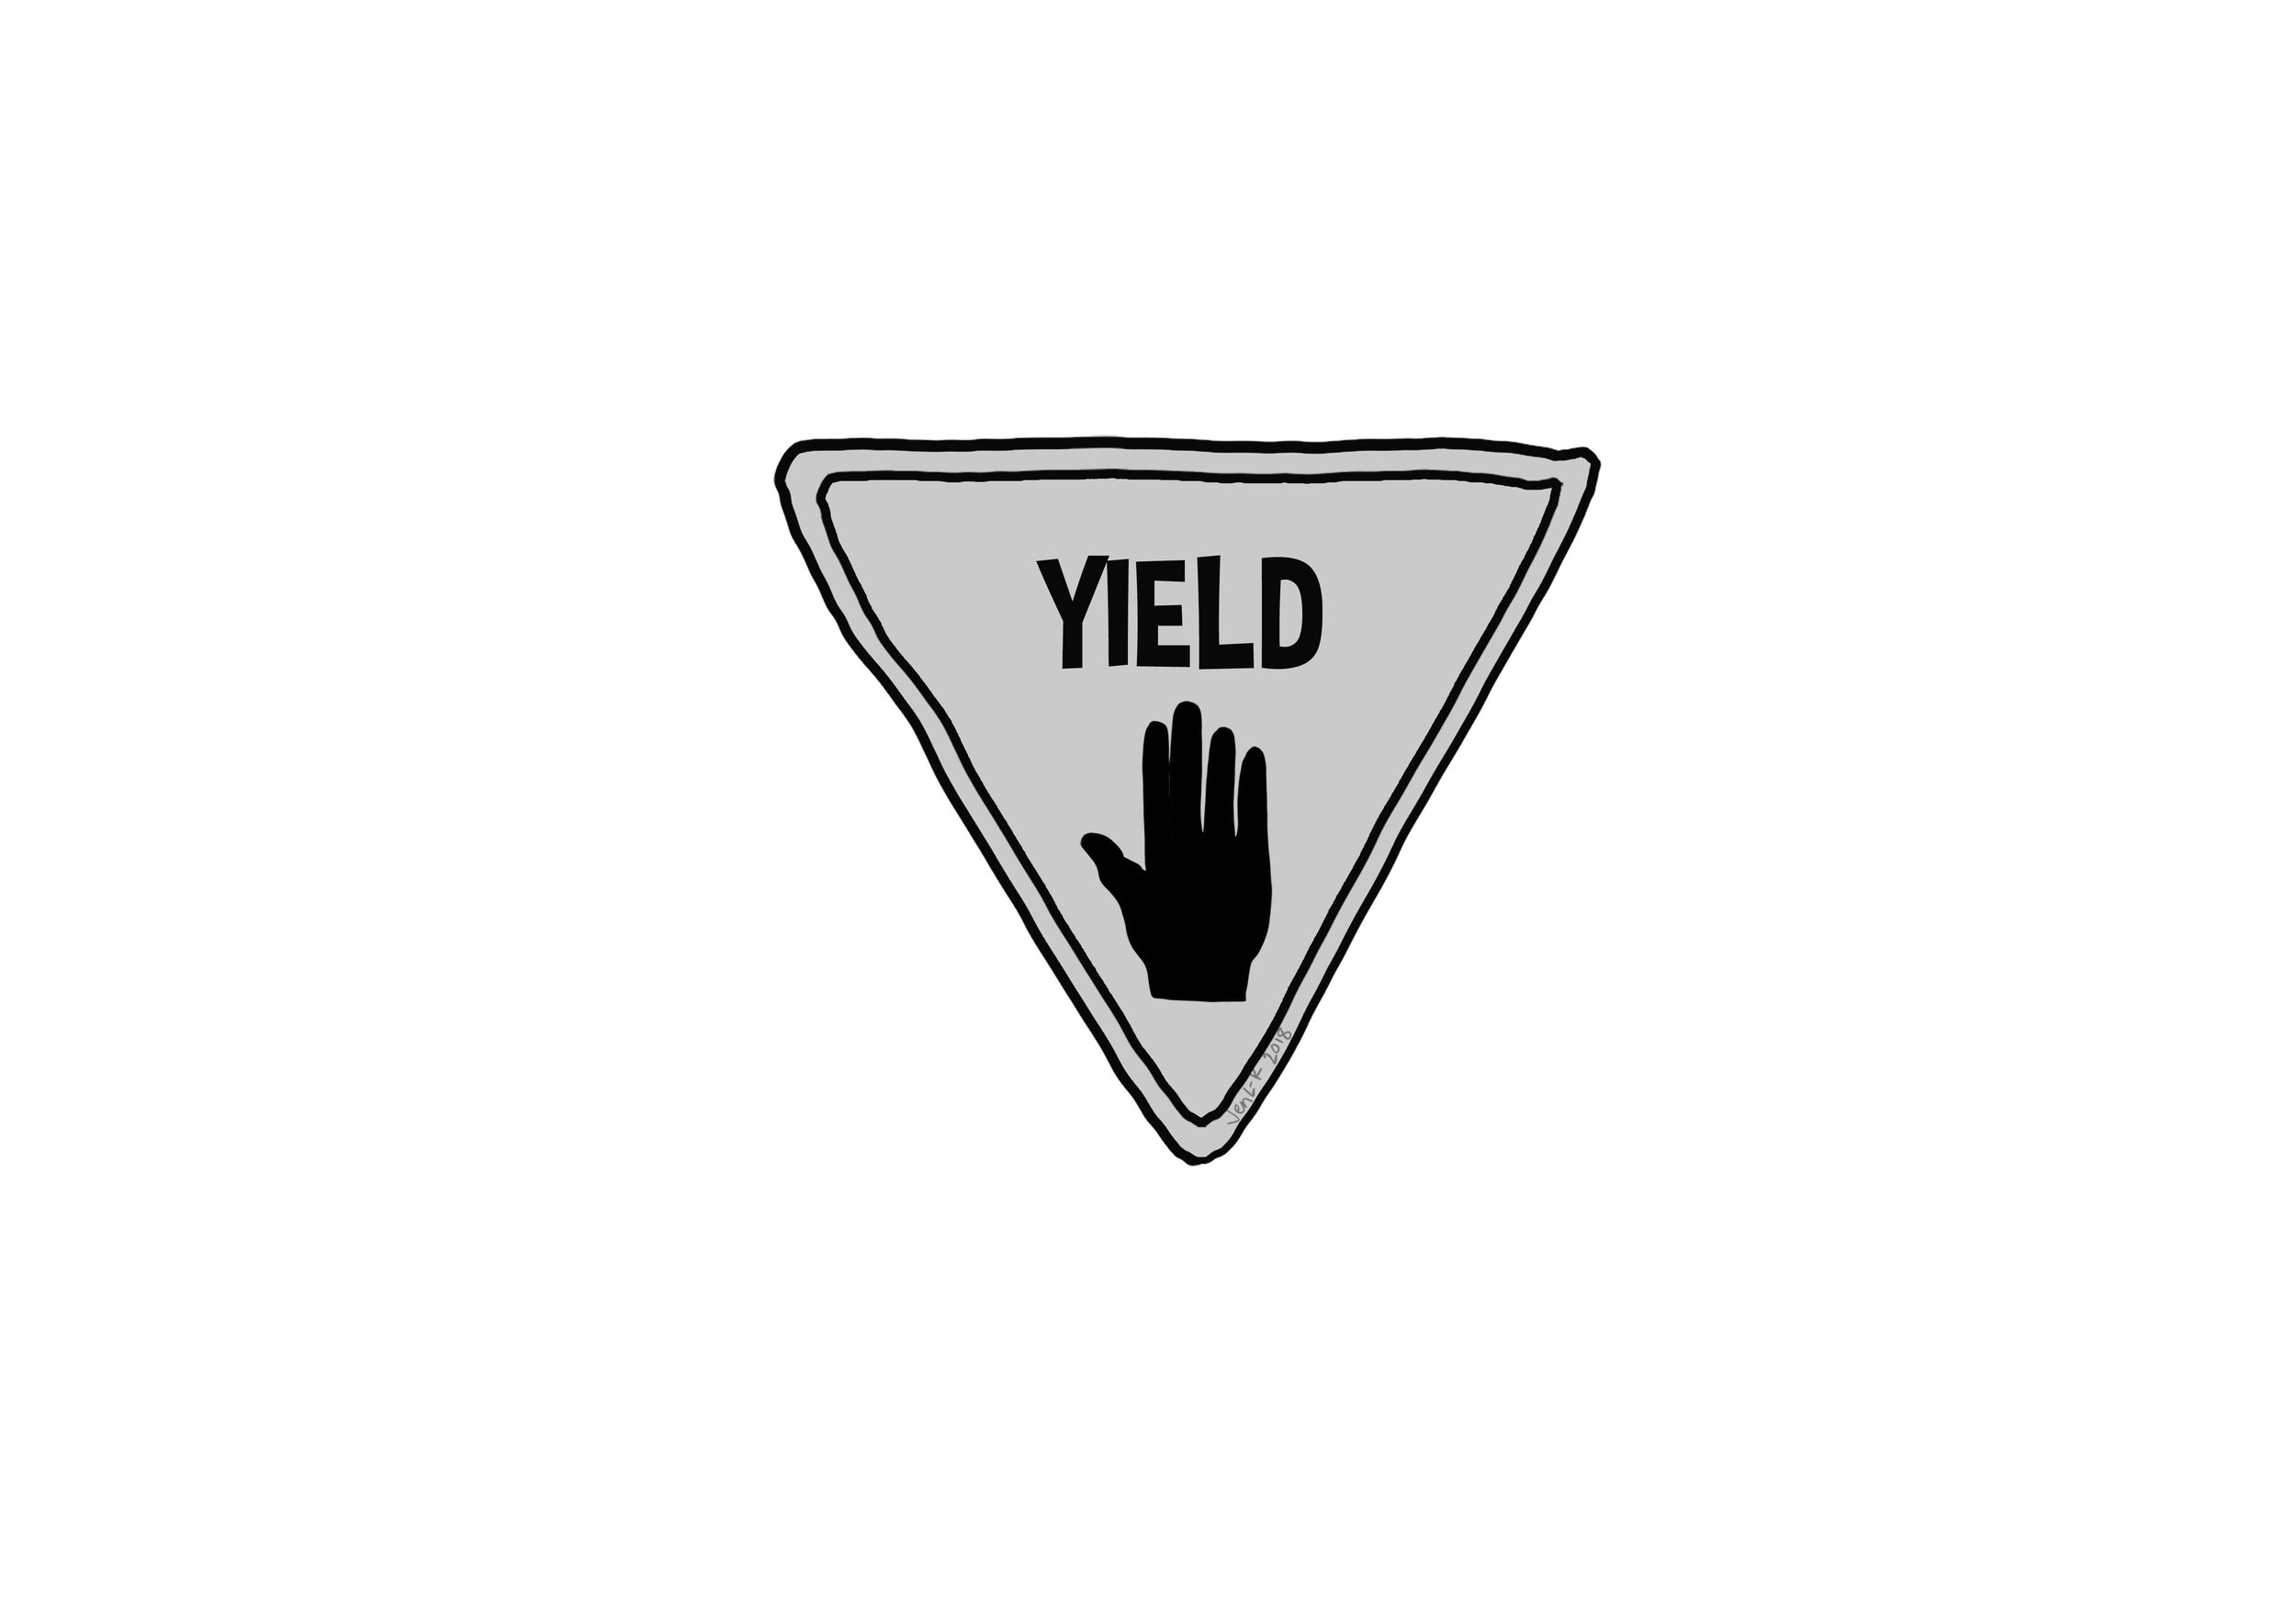 Signs-yield copy.jpg